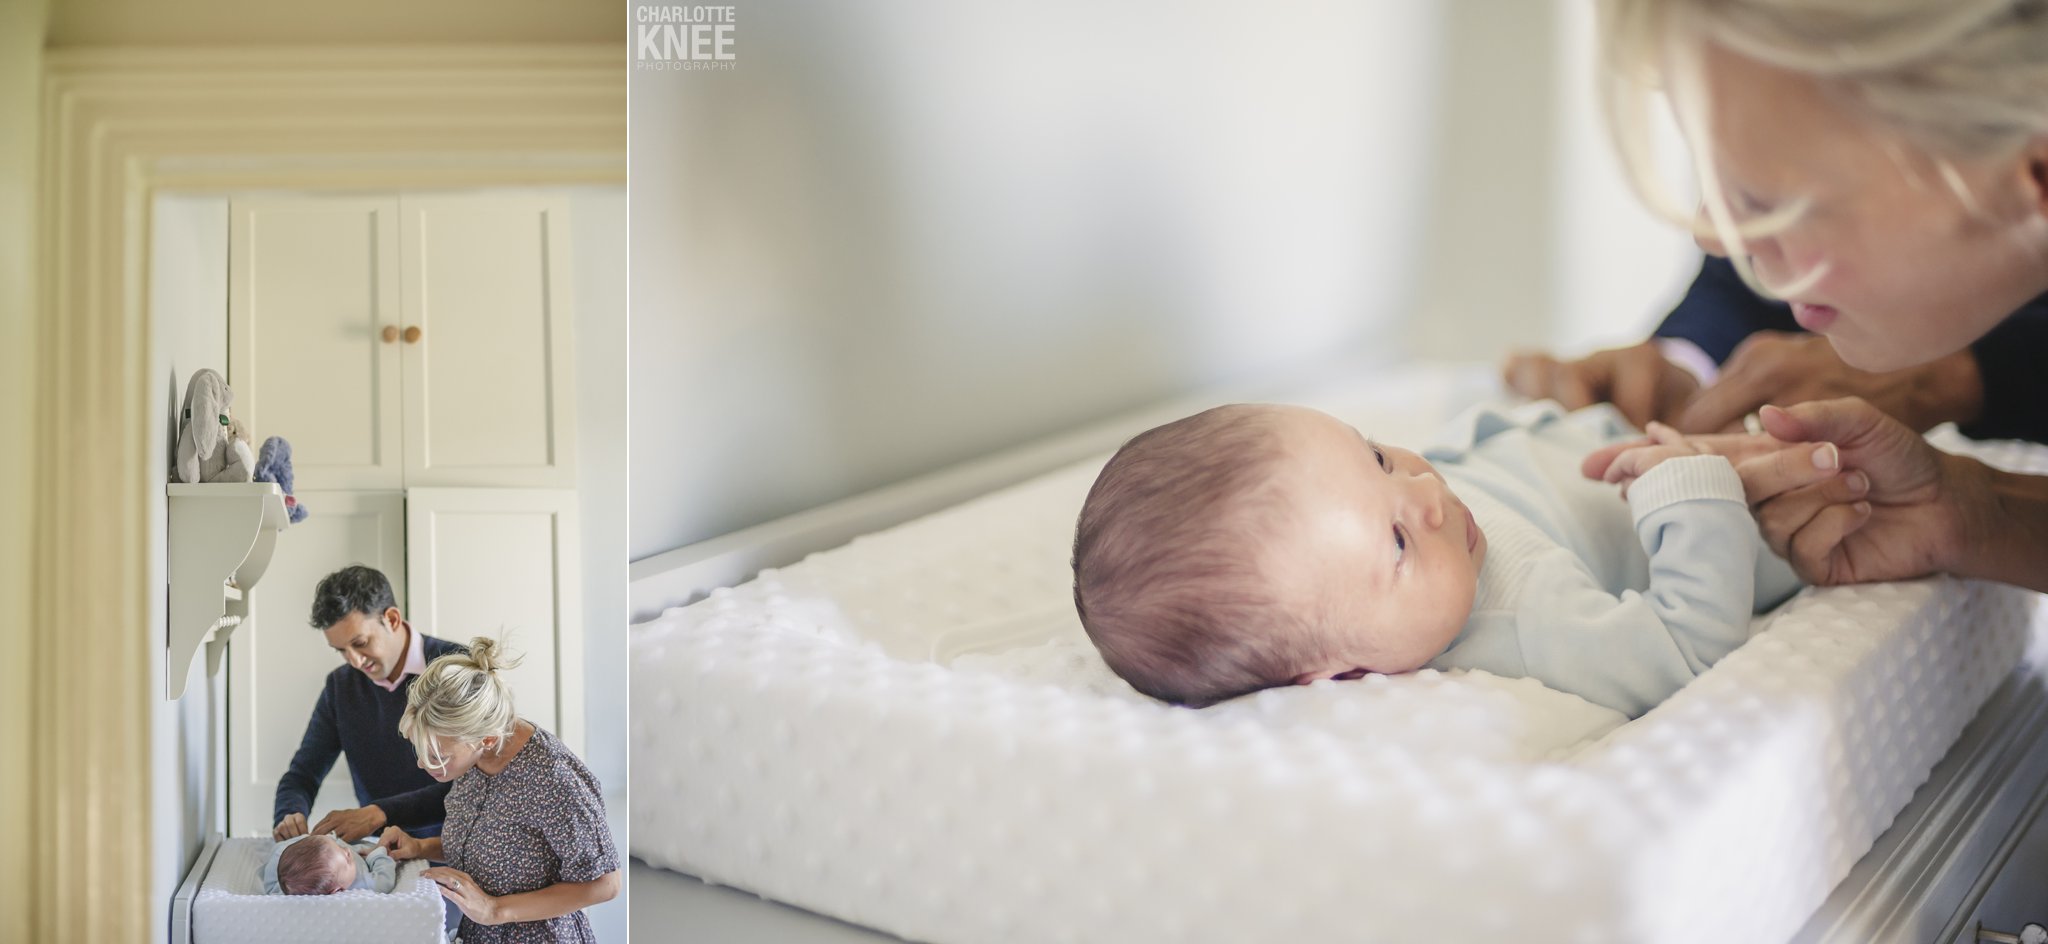 Newborn-Photography-Baby-Milo-Charlotte-Knee-Photography_0014.jpg